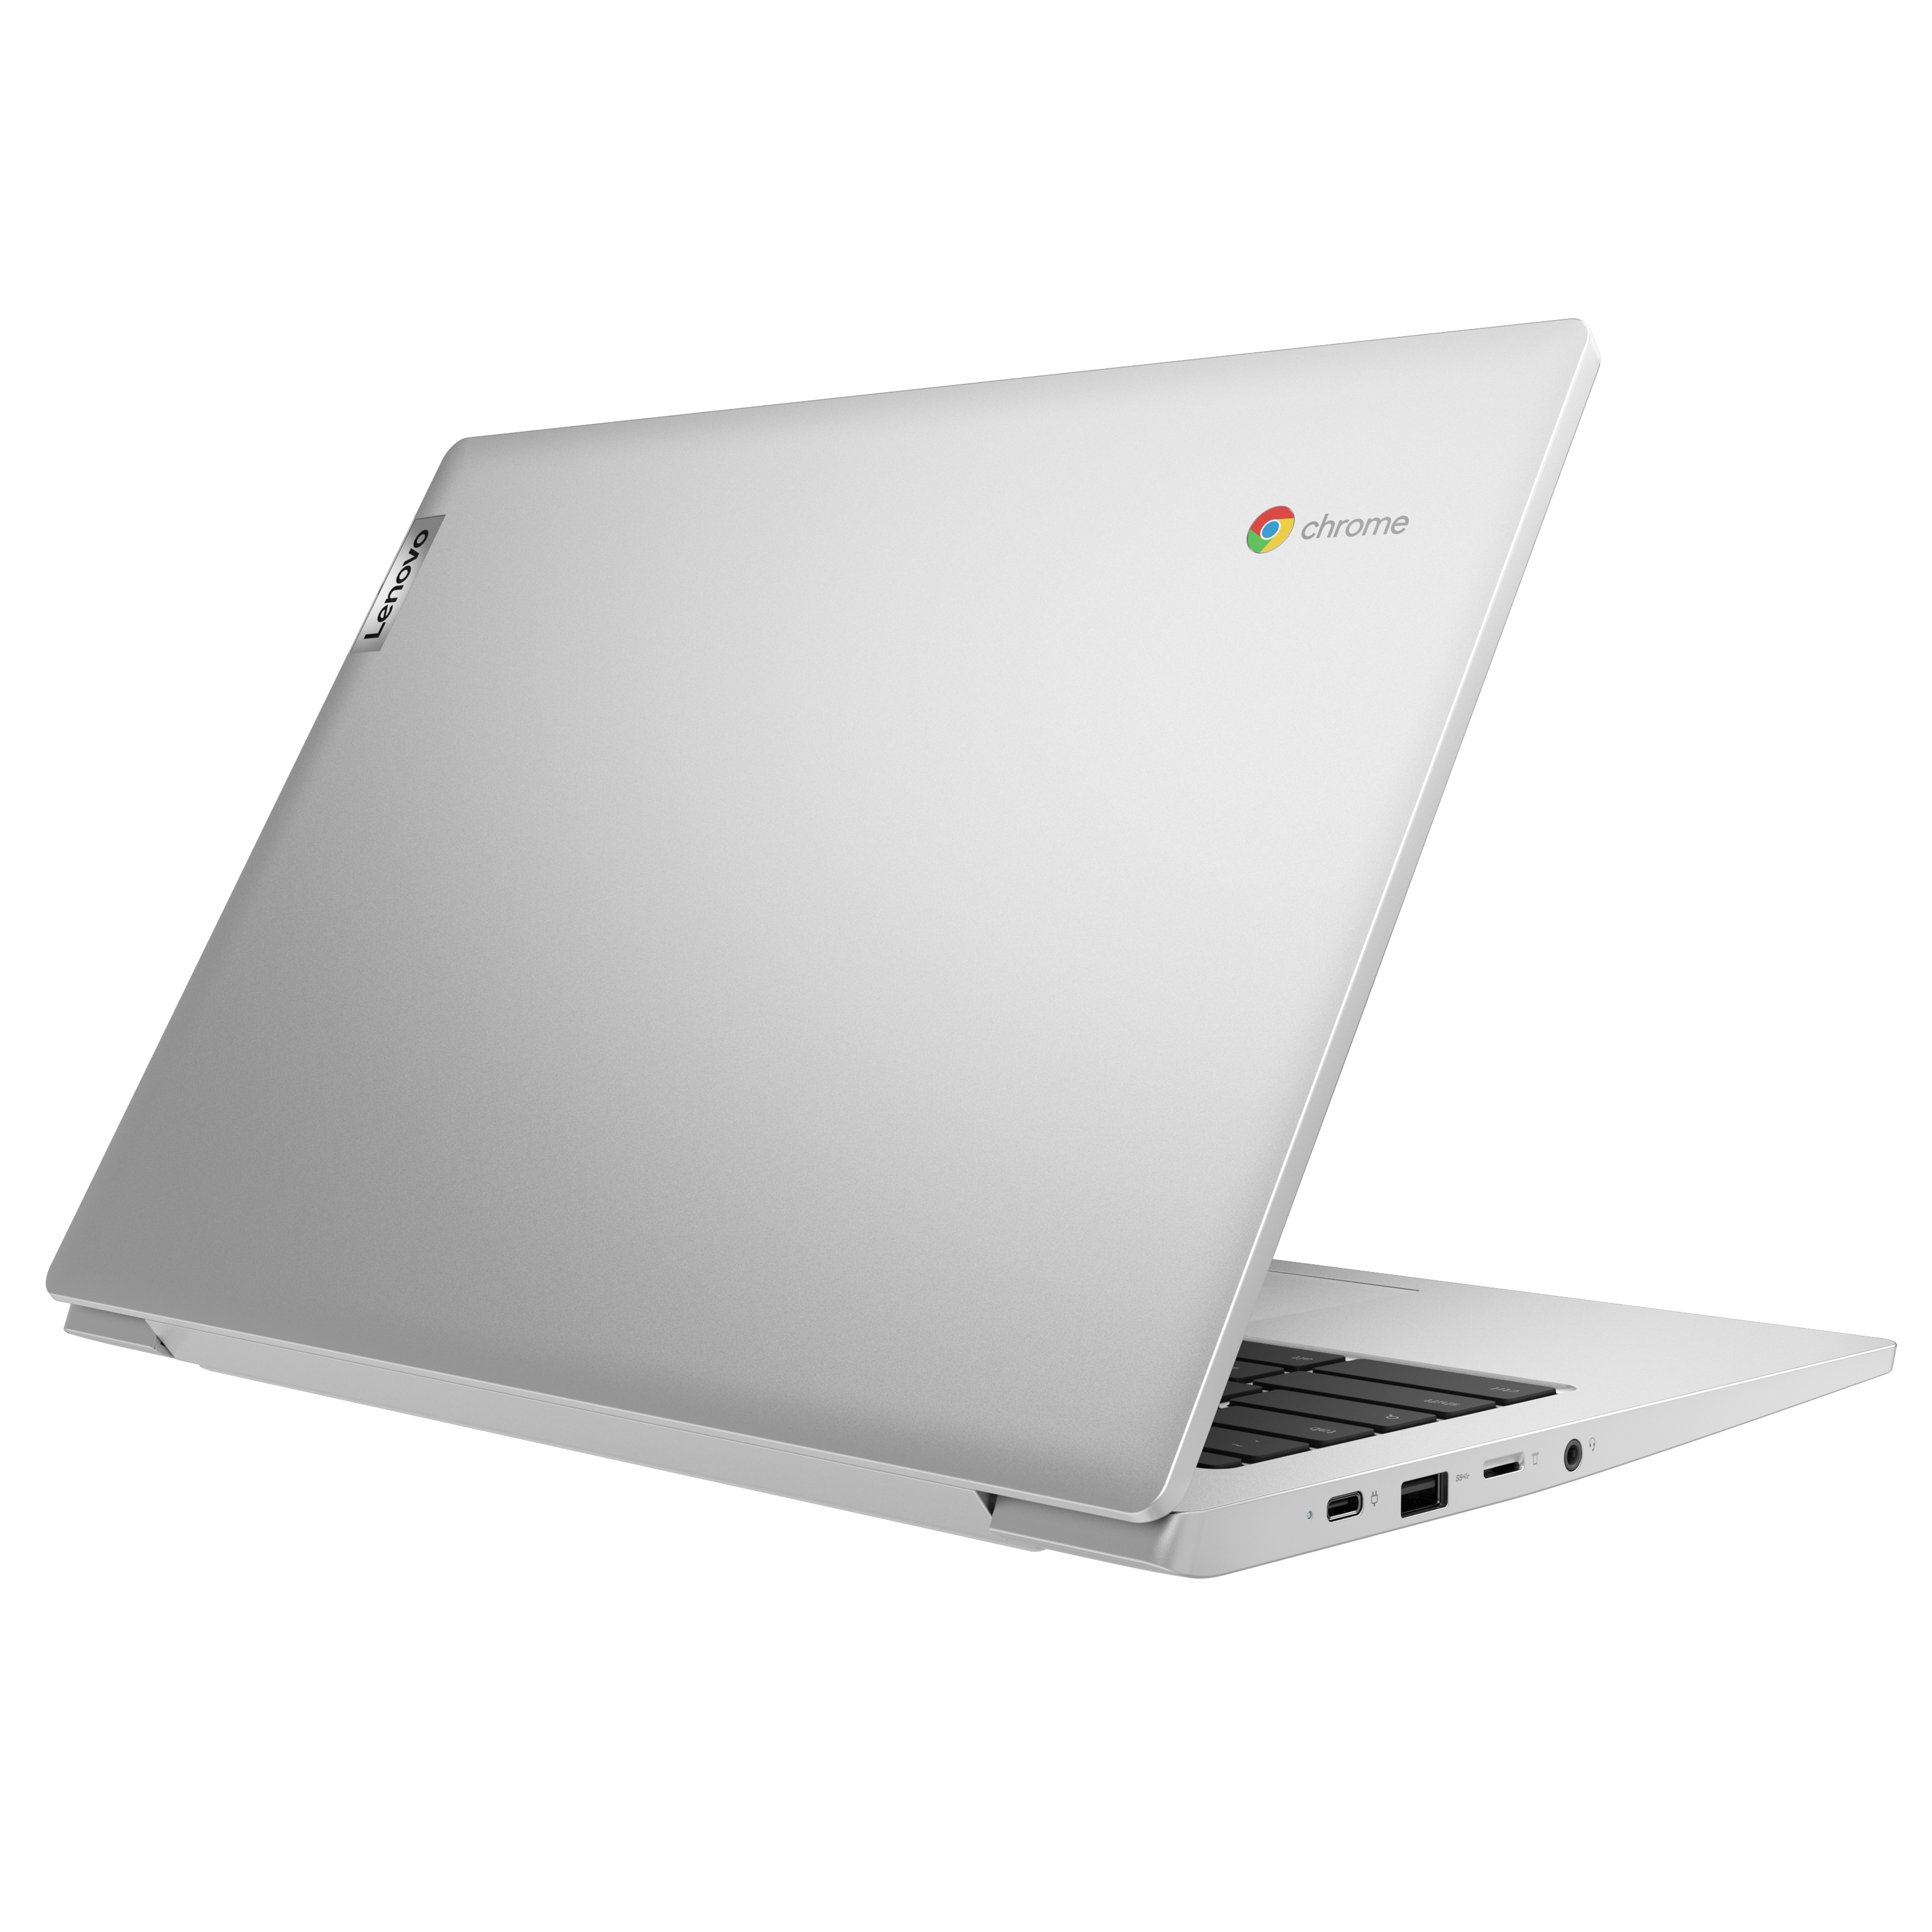 Lenovo Ideapad 3i 15.6" FHD PC Laptop, Intel Core i3-1115G4, 4GB, 128GB SSD, Platinum Grey, Windows 10 in S Mode, 81X8007EUS - image 3 of 14